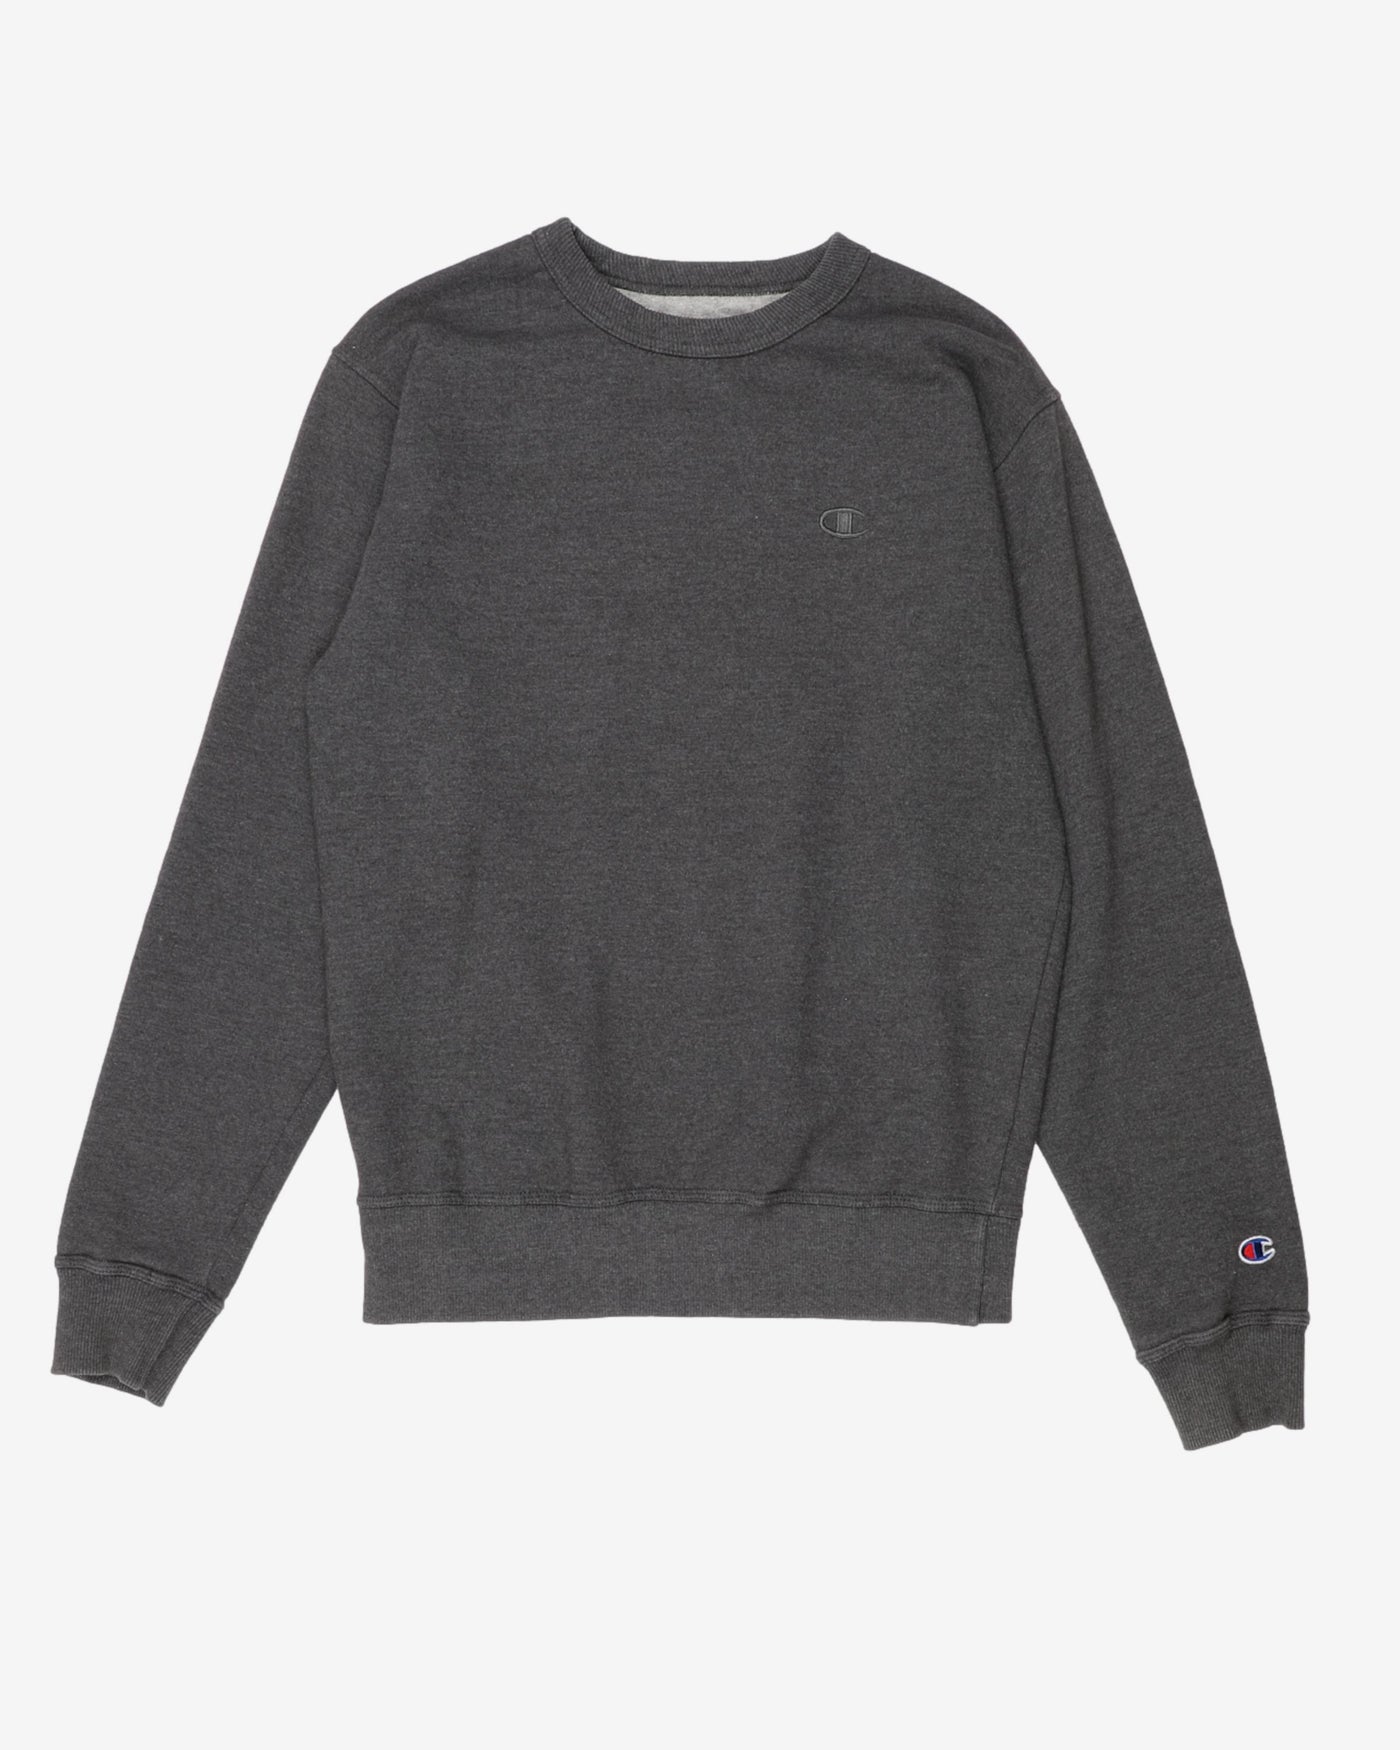 Champion Grey Plain Sweatshirt - L